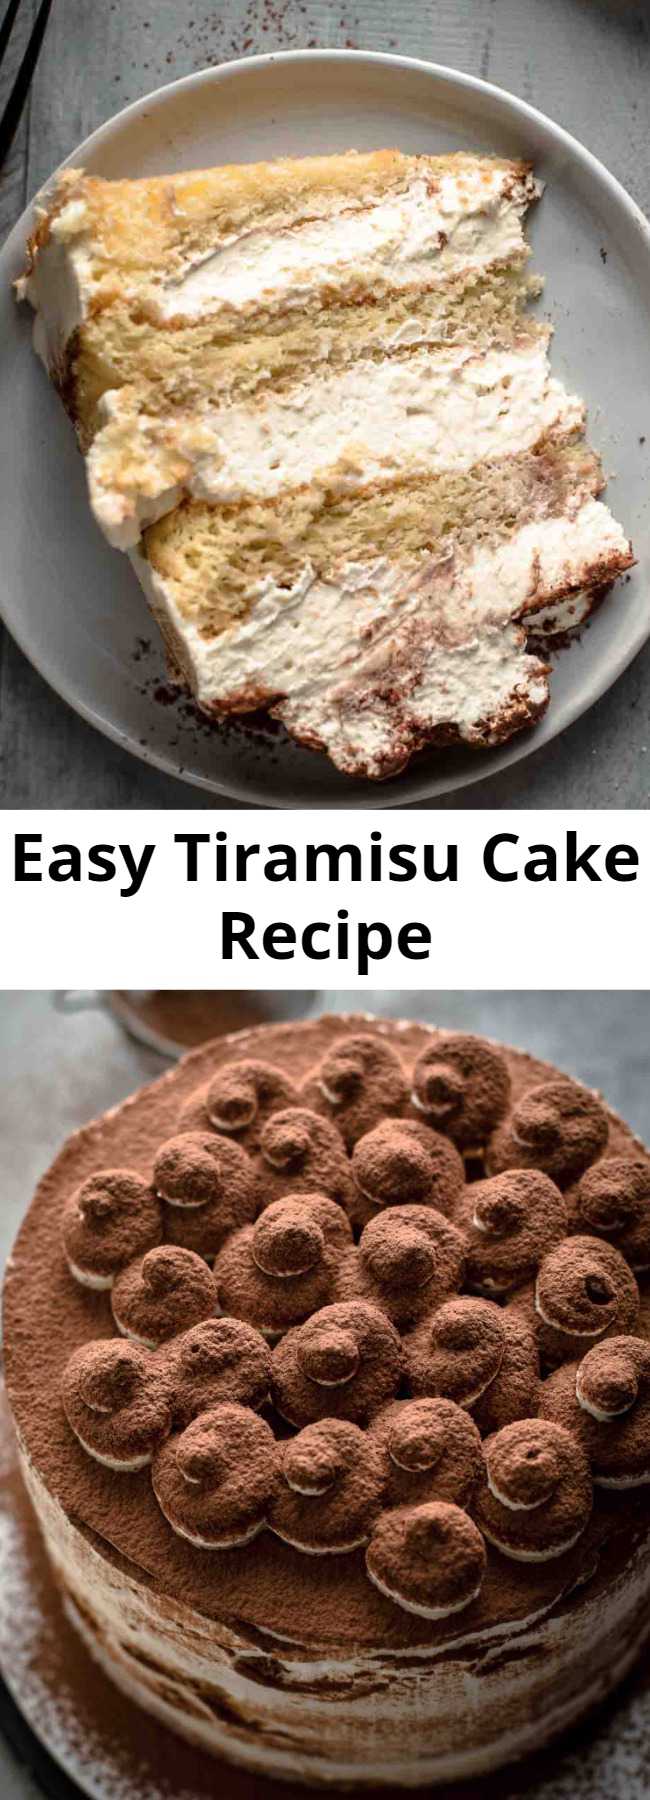 Easy Tiramisu Cake Recipe - If you want to have Tiramisu and cake at the same time, then this Tiramisu Cake is the solution. 5 ingredient genoise cake brushed with strong espresso and filled with irresistibly creamy coffee mascarpone cream. No raw eggs in the frosting. Just 10 ingredients! #tiramisu #tiramisucake #cake #italiandessert #dessert #baking #tiramisucakerecipe